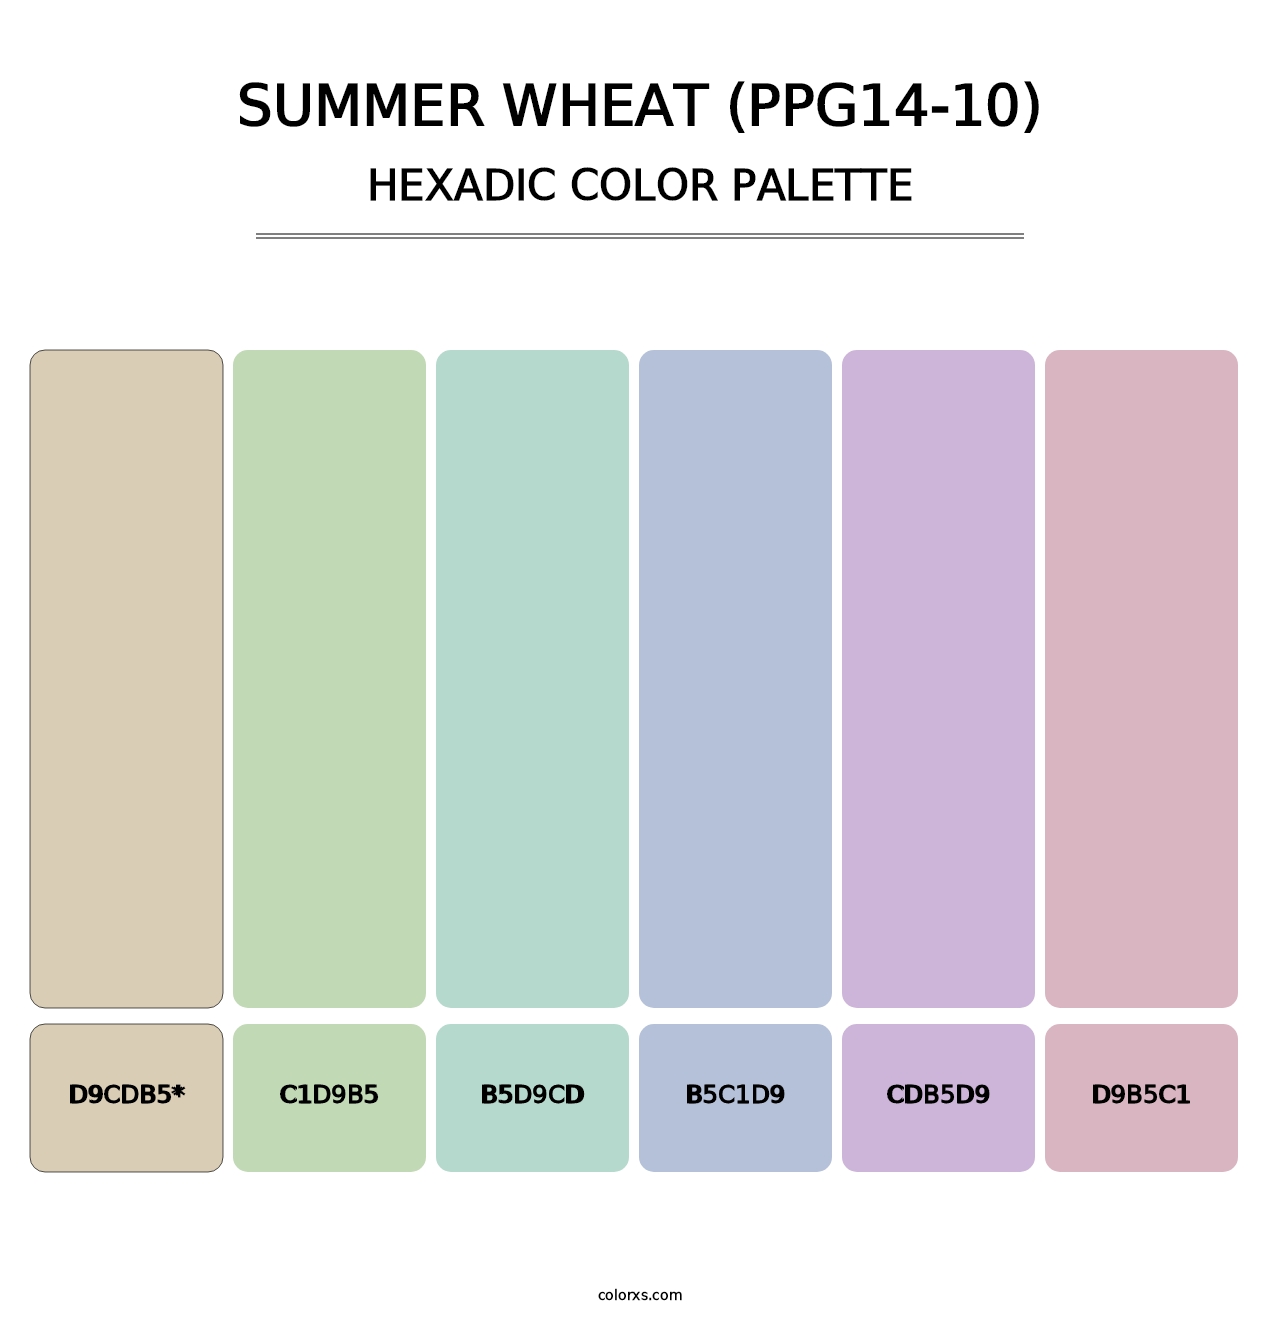 Summer Wheat (PPG14-10) - Hexadic Color Palette